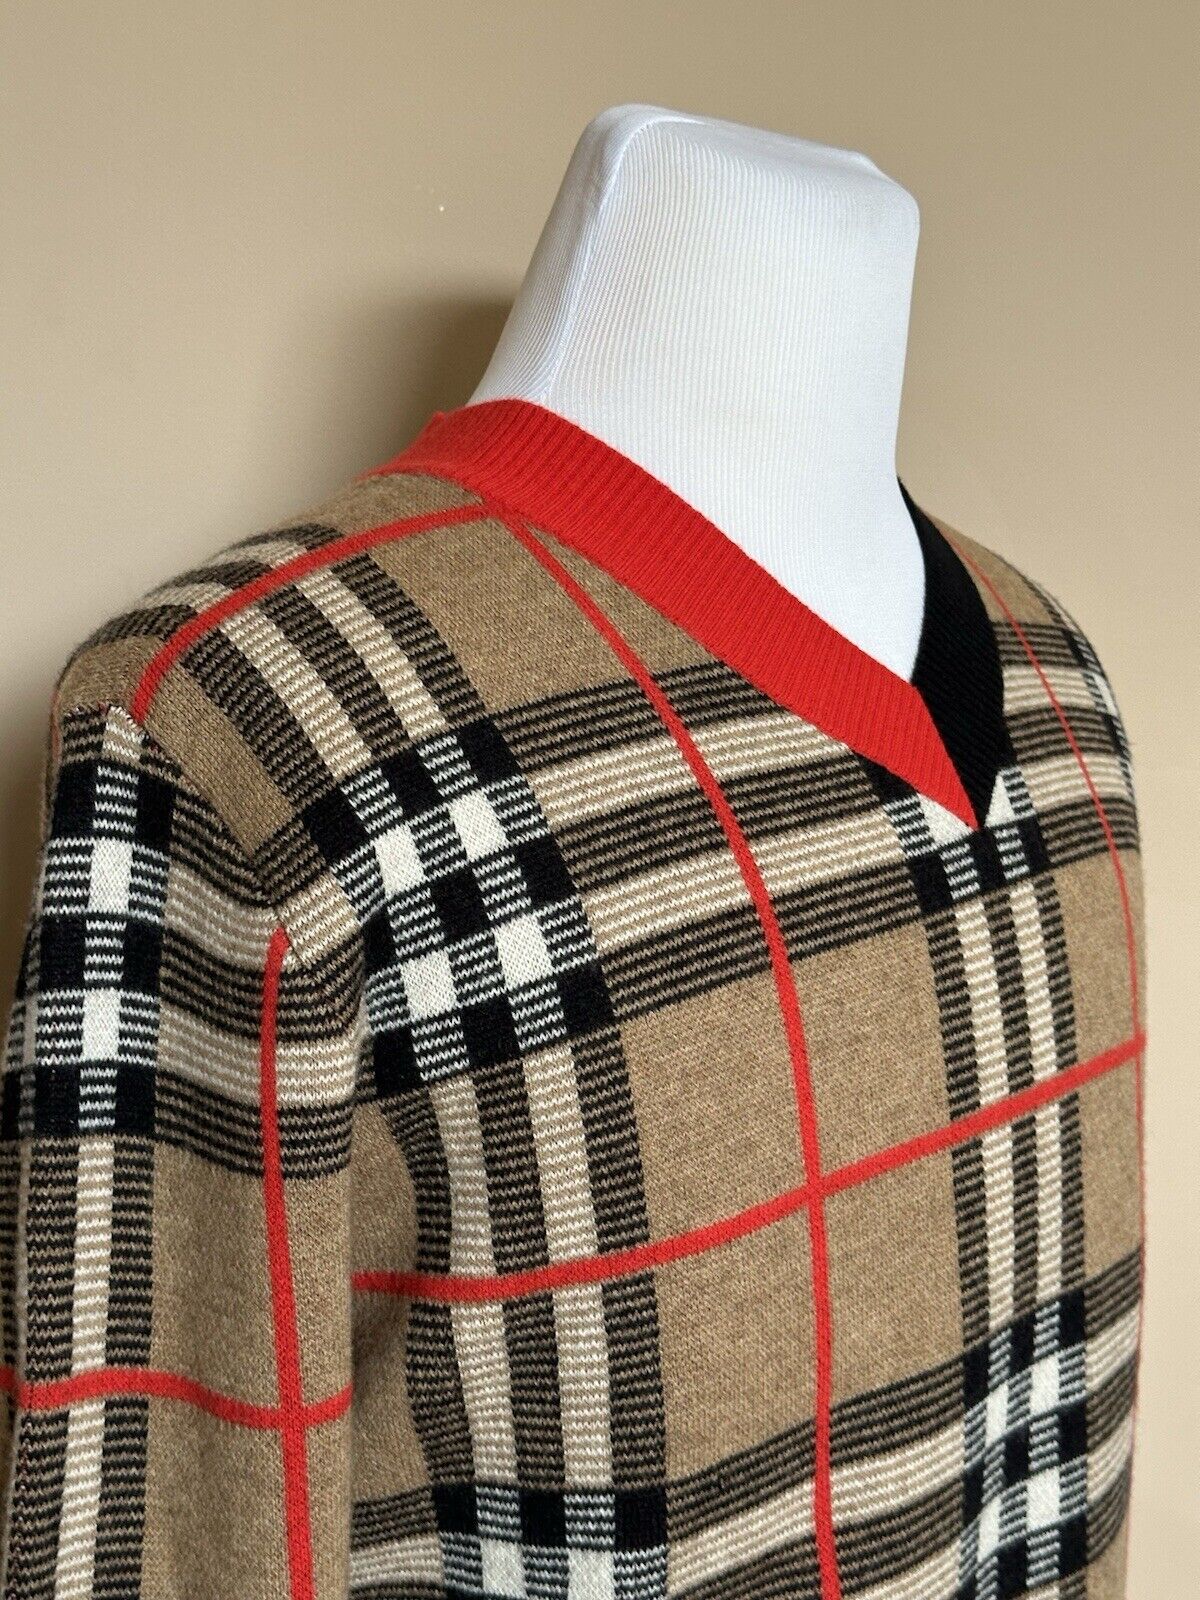 Burberry Duggar Knit Check Men's V-Neck Marino Wool Pullover Sweater Small